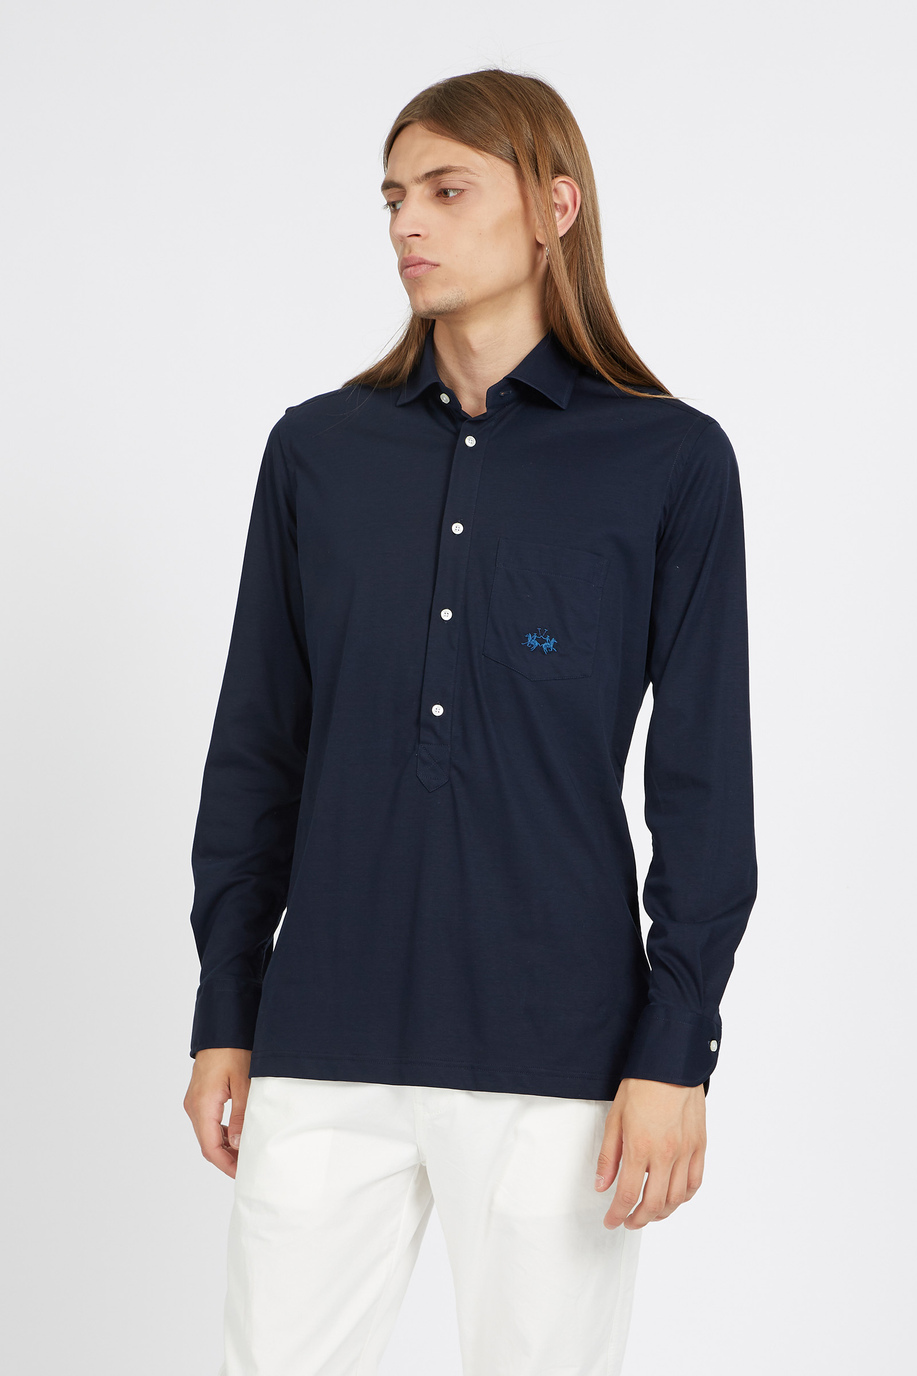 Men's custom fit long sleeve jersey cotton shirt - Varden - test 2 | La Martina - Official Online Shop